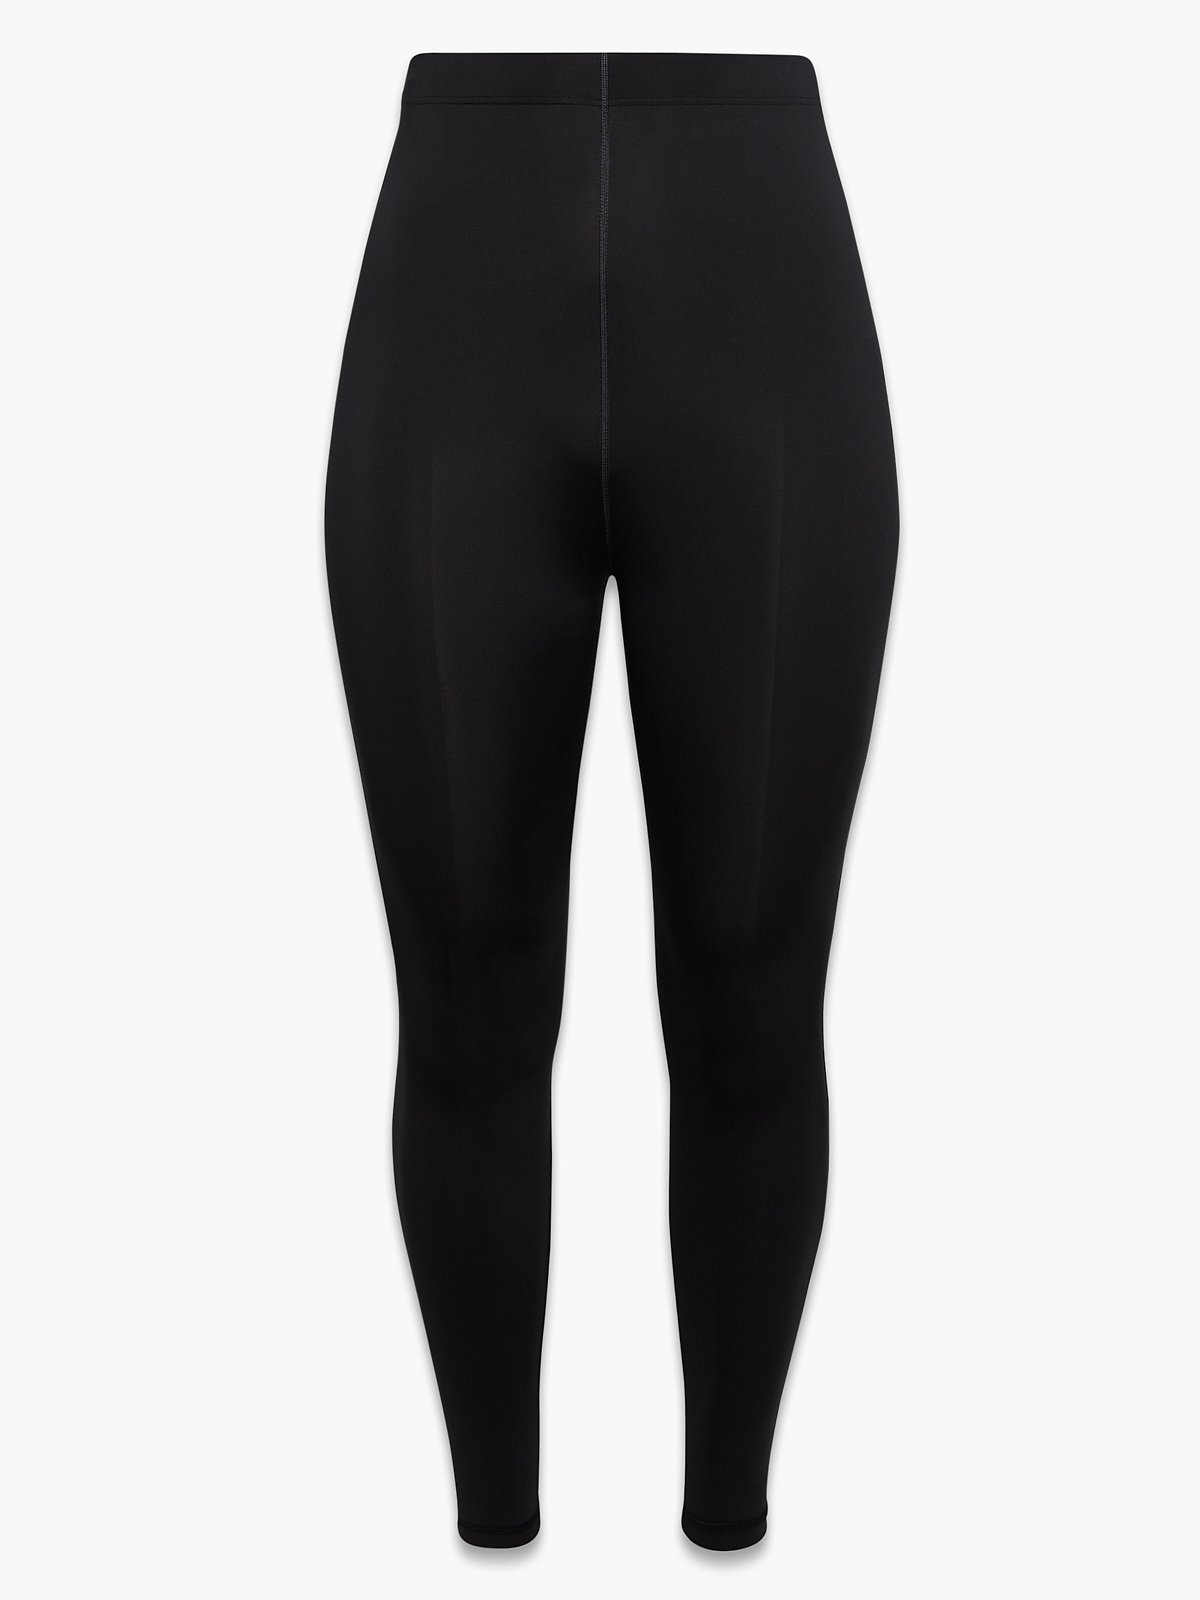 HMGYH satina high waisted leggings for women Ribbed High-Rise Split Hem  Pants (Color : Black, Size : Tall S)